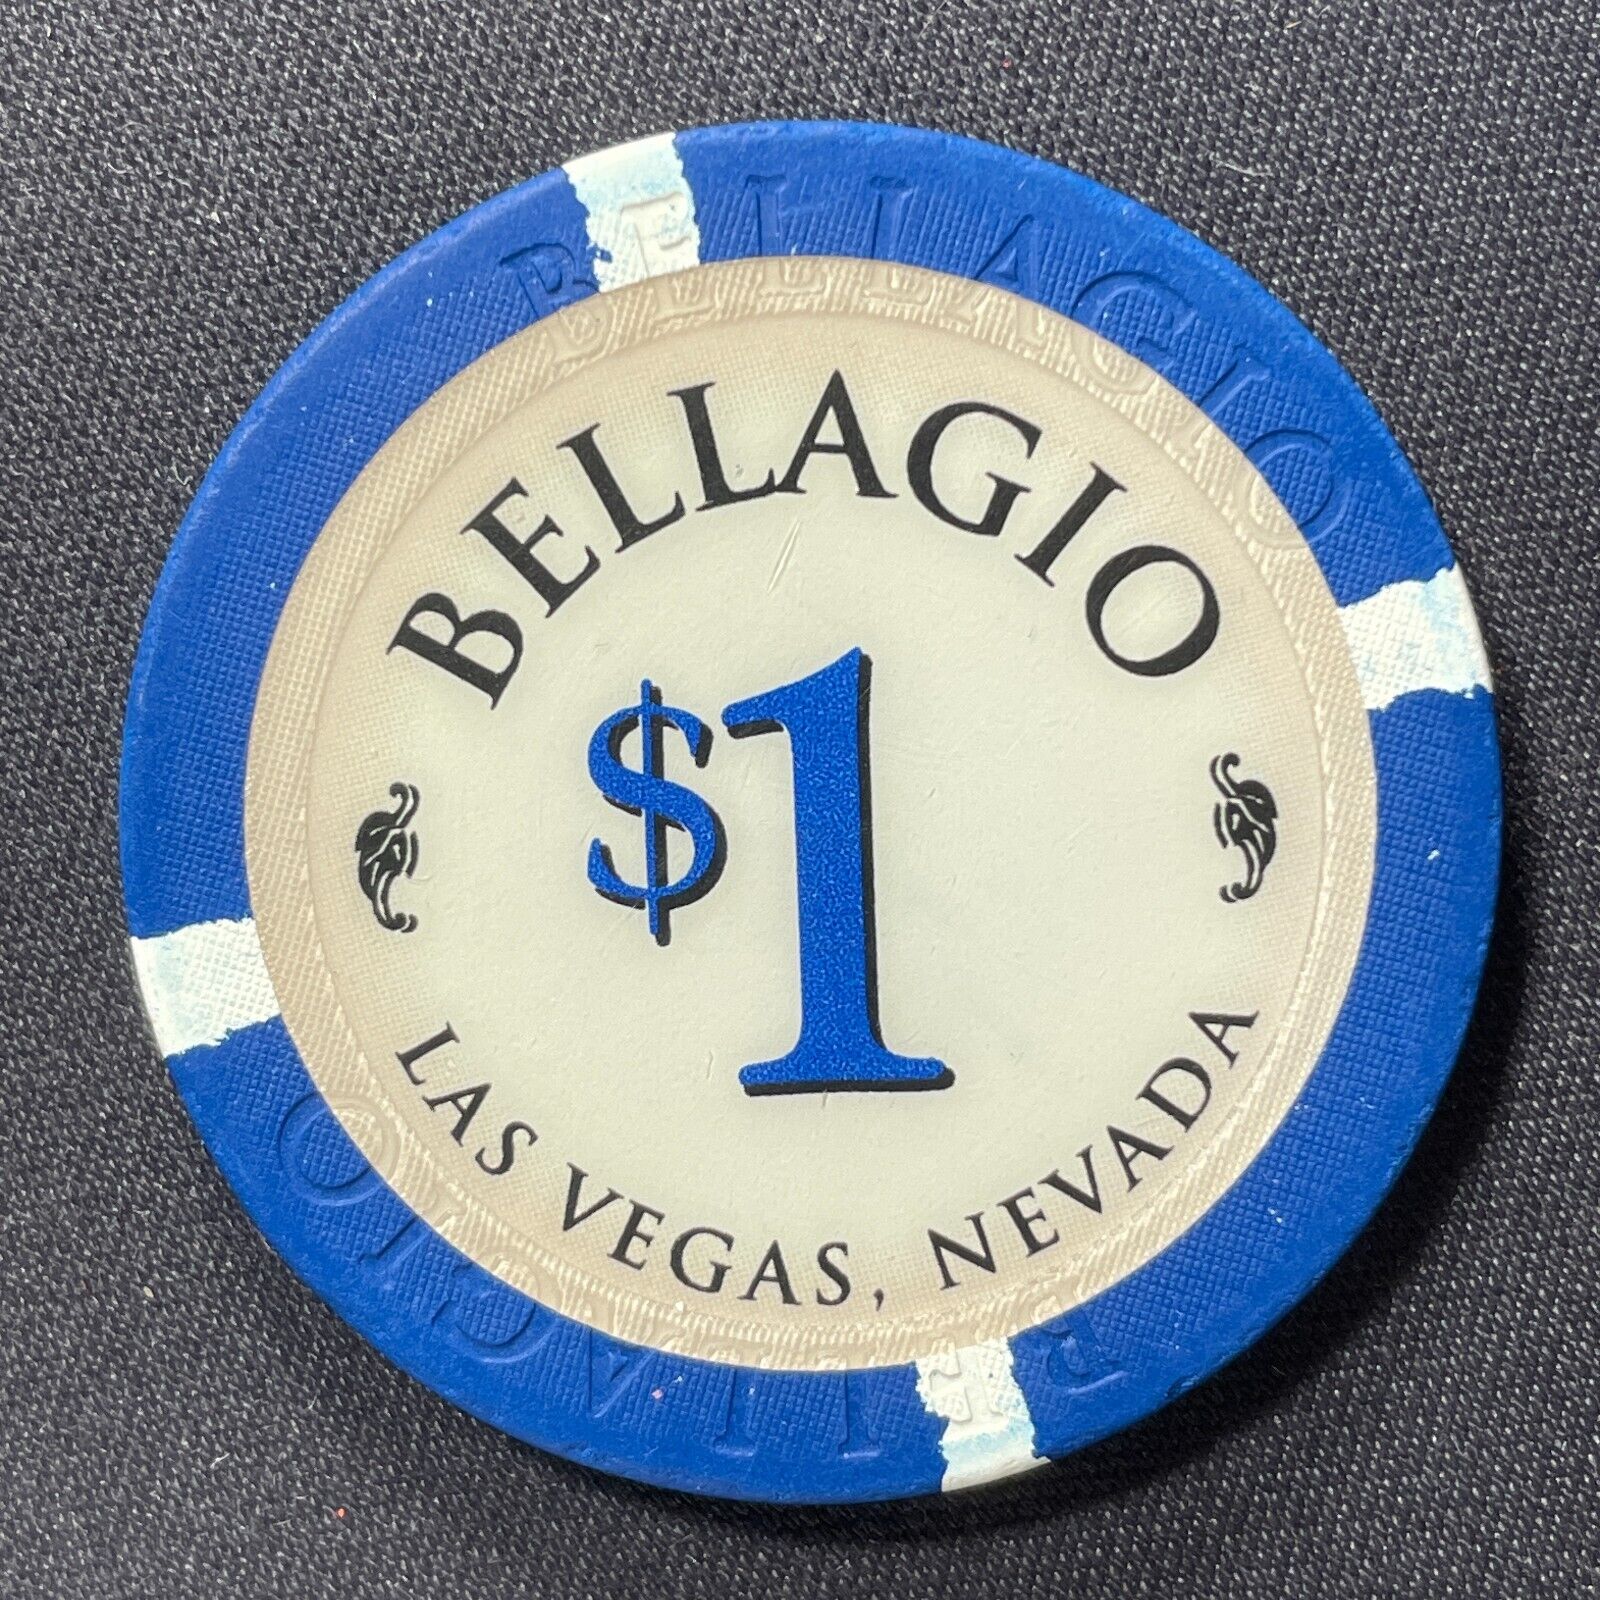 Bellagio Las Vegas $1 casino chip house chip 1998 obsolete gaming token LV1